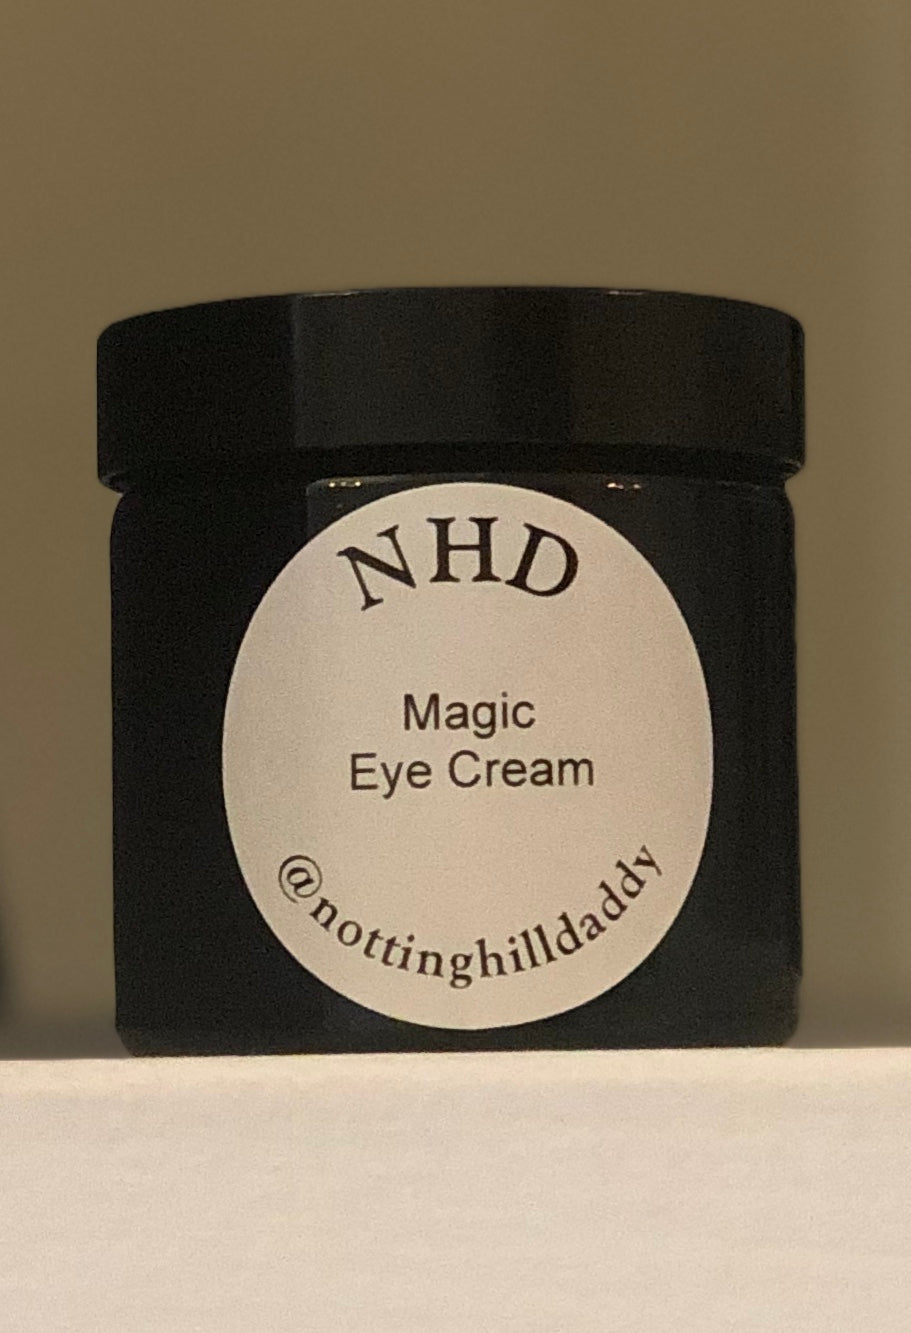 NHD Magic Eye Cream